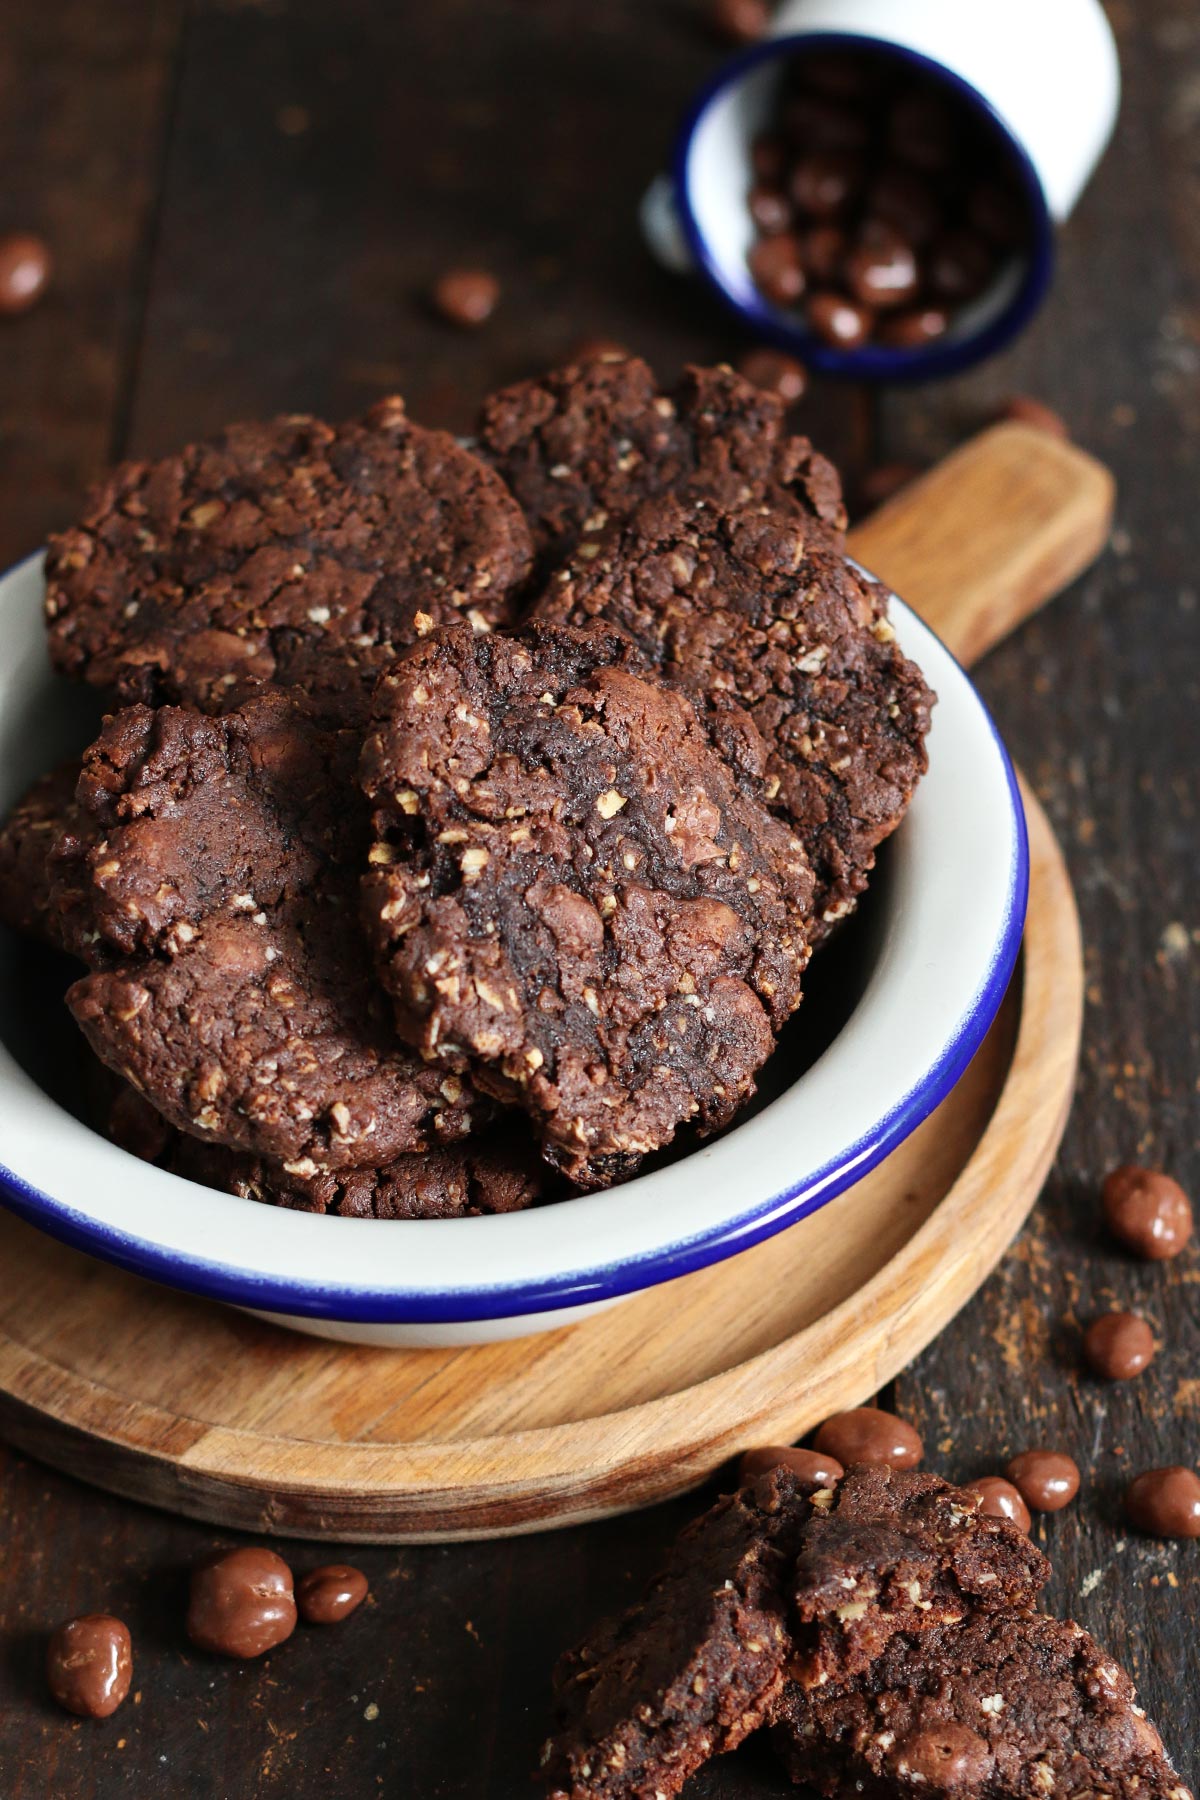 Chocolate Oatmeal Raisin "Smash" Cookies